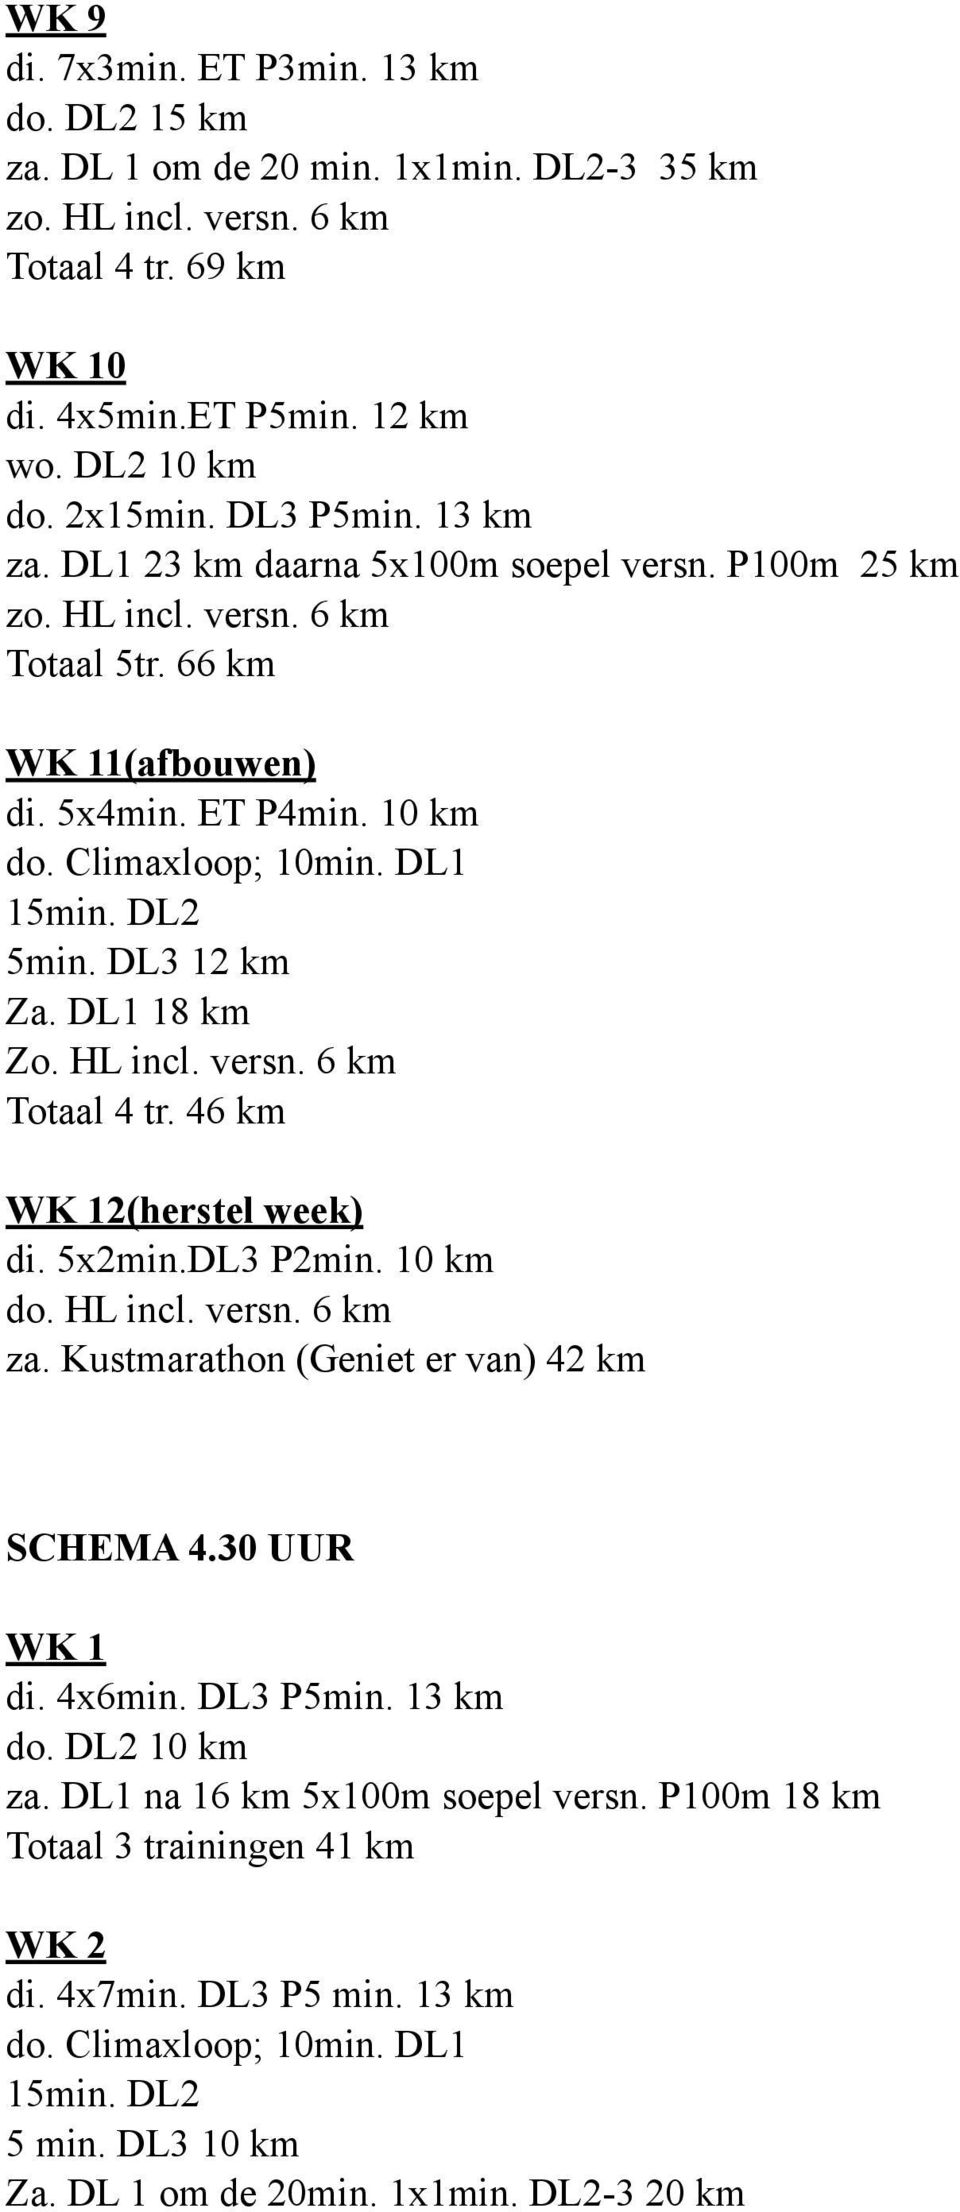 DL2 5min. DL3 12 km Za. DL1 18 km Zo. HL incl. versn. 6 km Totaal 4 tr. 46 km WK 12(herstel week) di. 5x2min.DL3 P2min. 10 km do. HL incl. versn. 6 km za. Kustmarathon (Geniet er van) 42 km! SCHEMA 4.